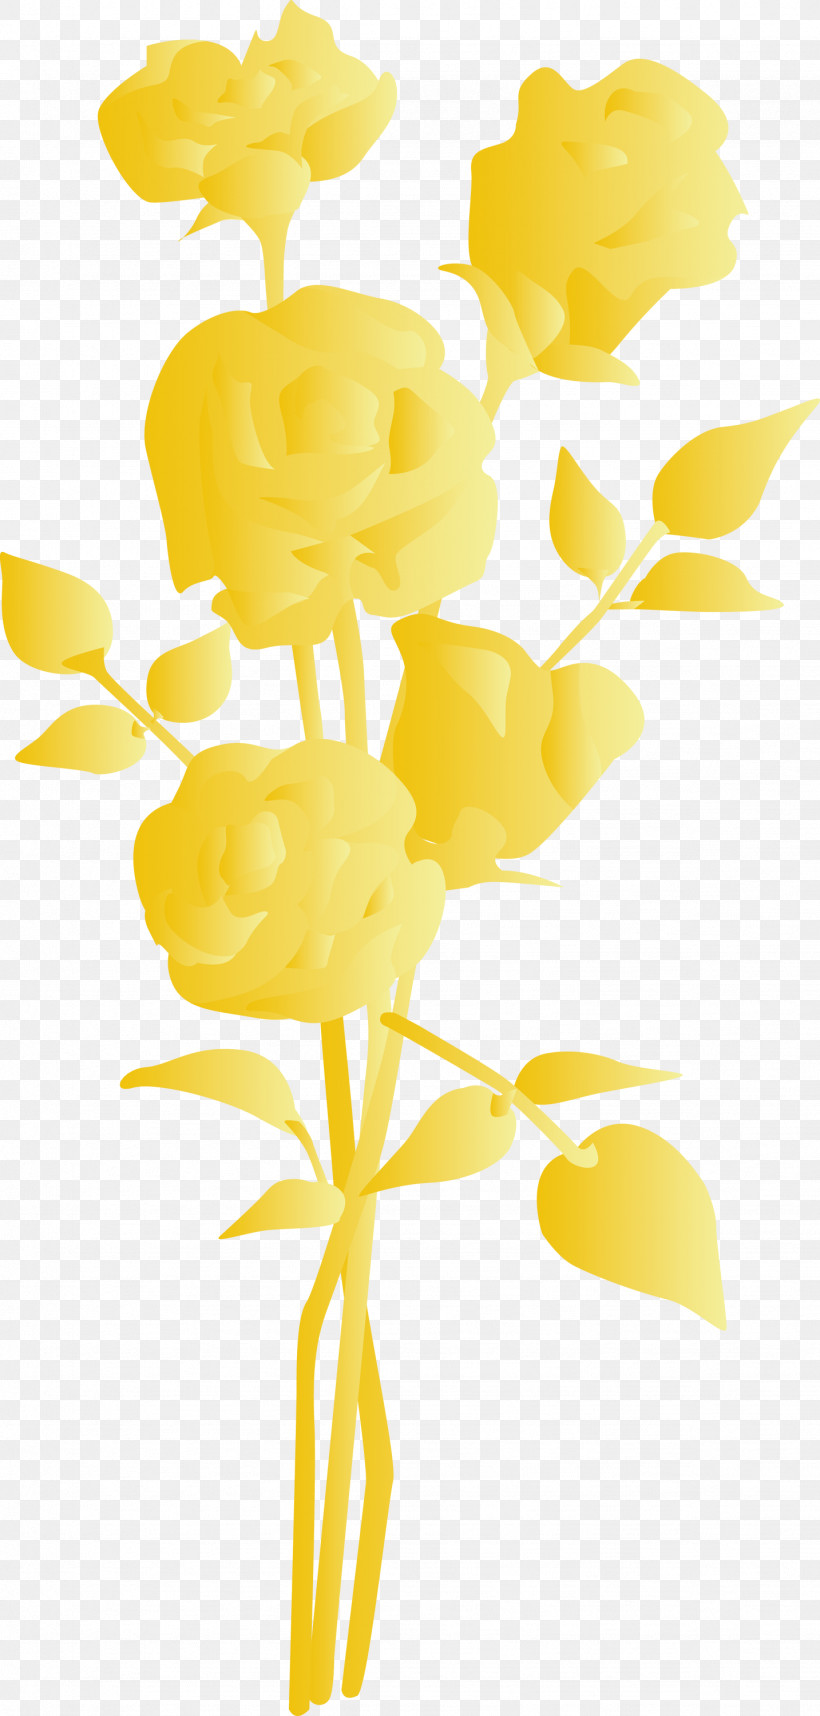 Yellow Cut Flowers Flower Plant Pedicel, PNG, 1433x3000px, Yellow, Cut Flowers, Flower, Pedicel, Plant Download Free